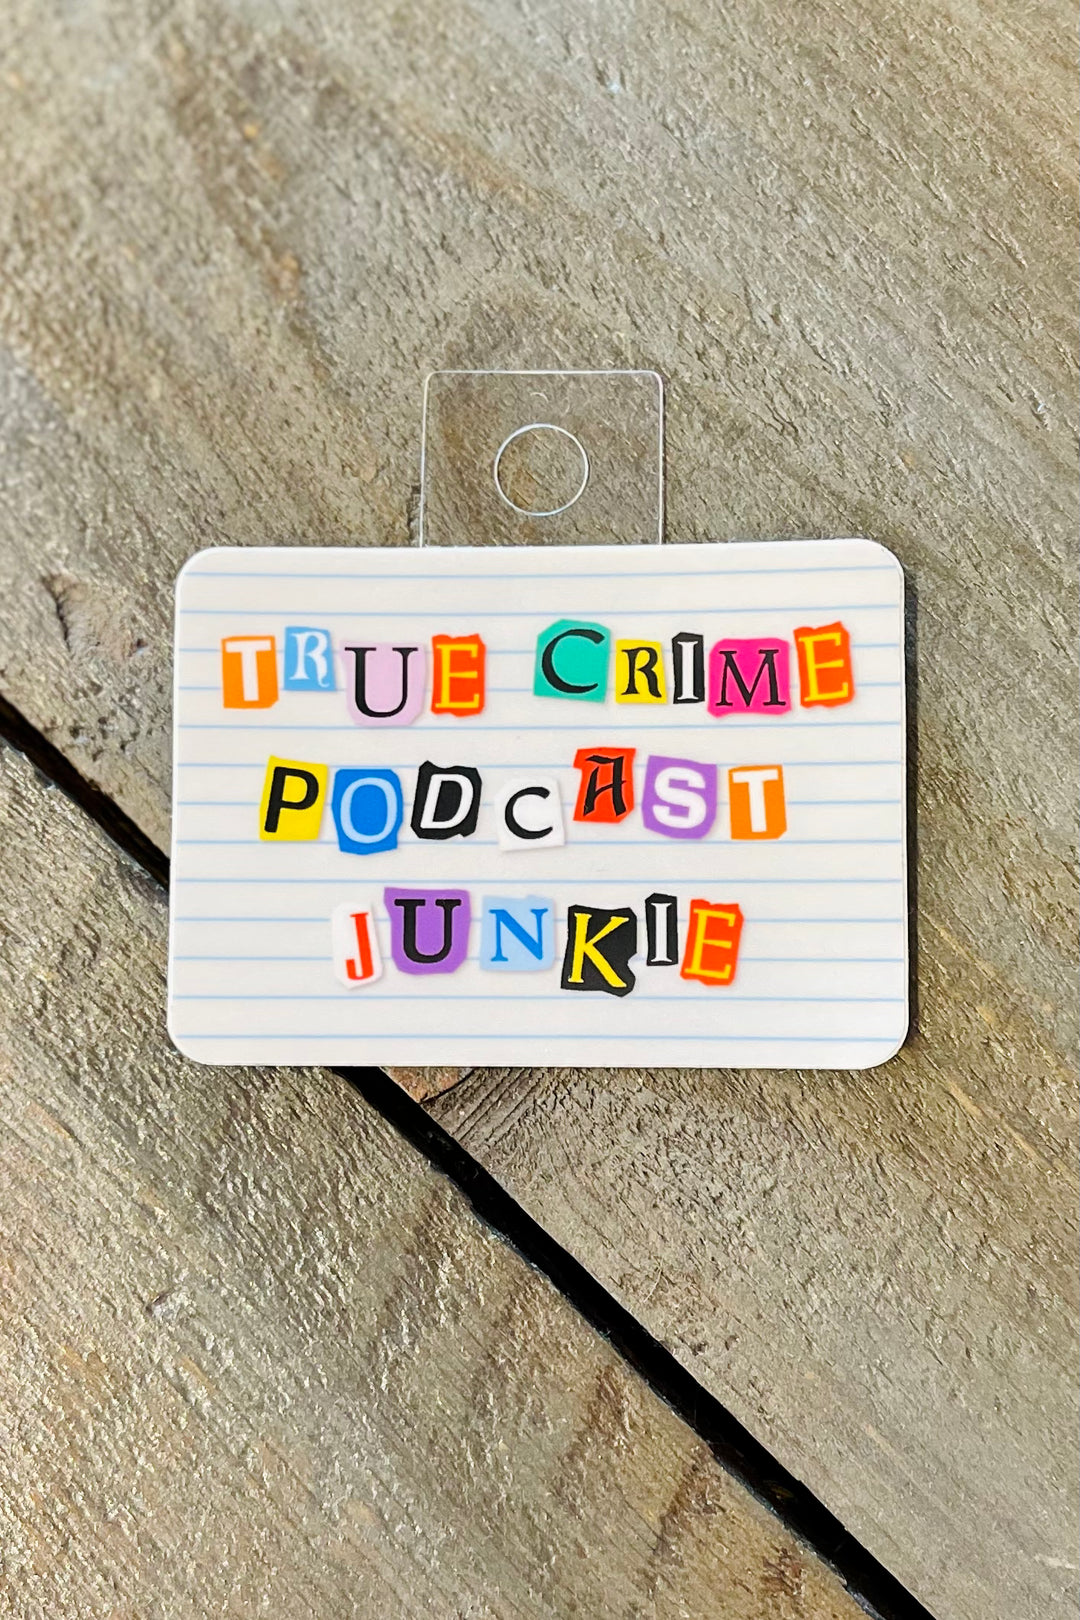 True Crime Podcast Junkie Sticker